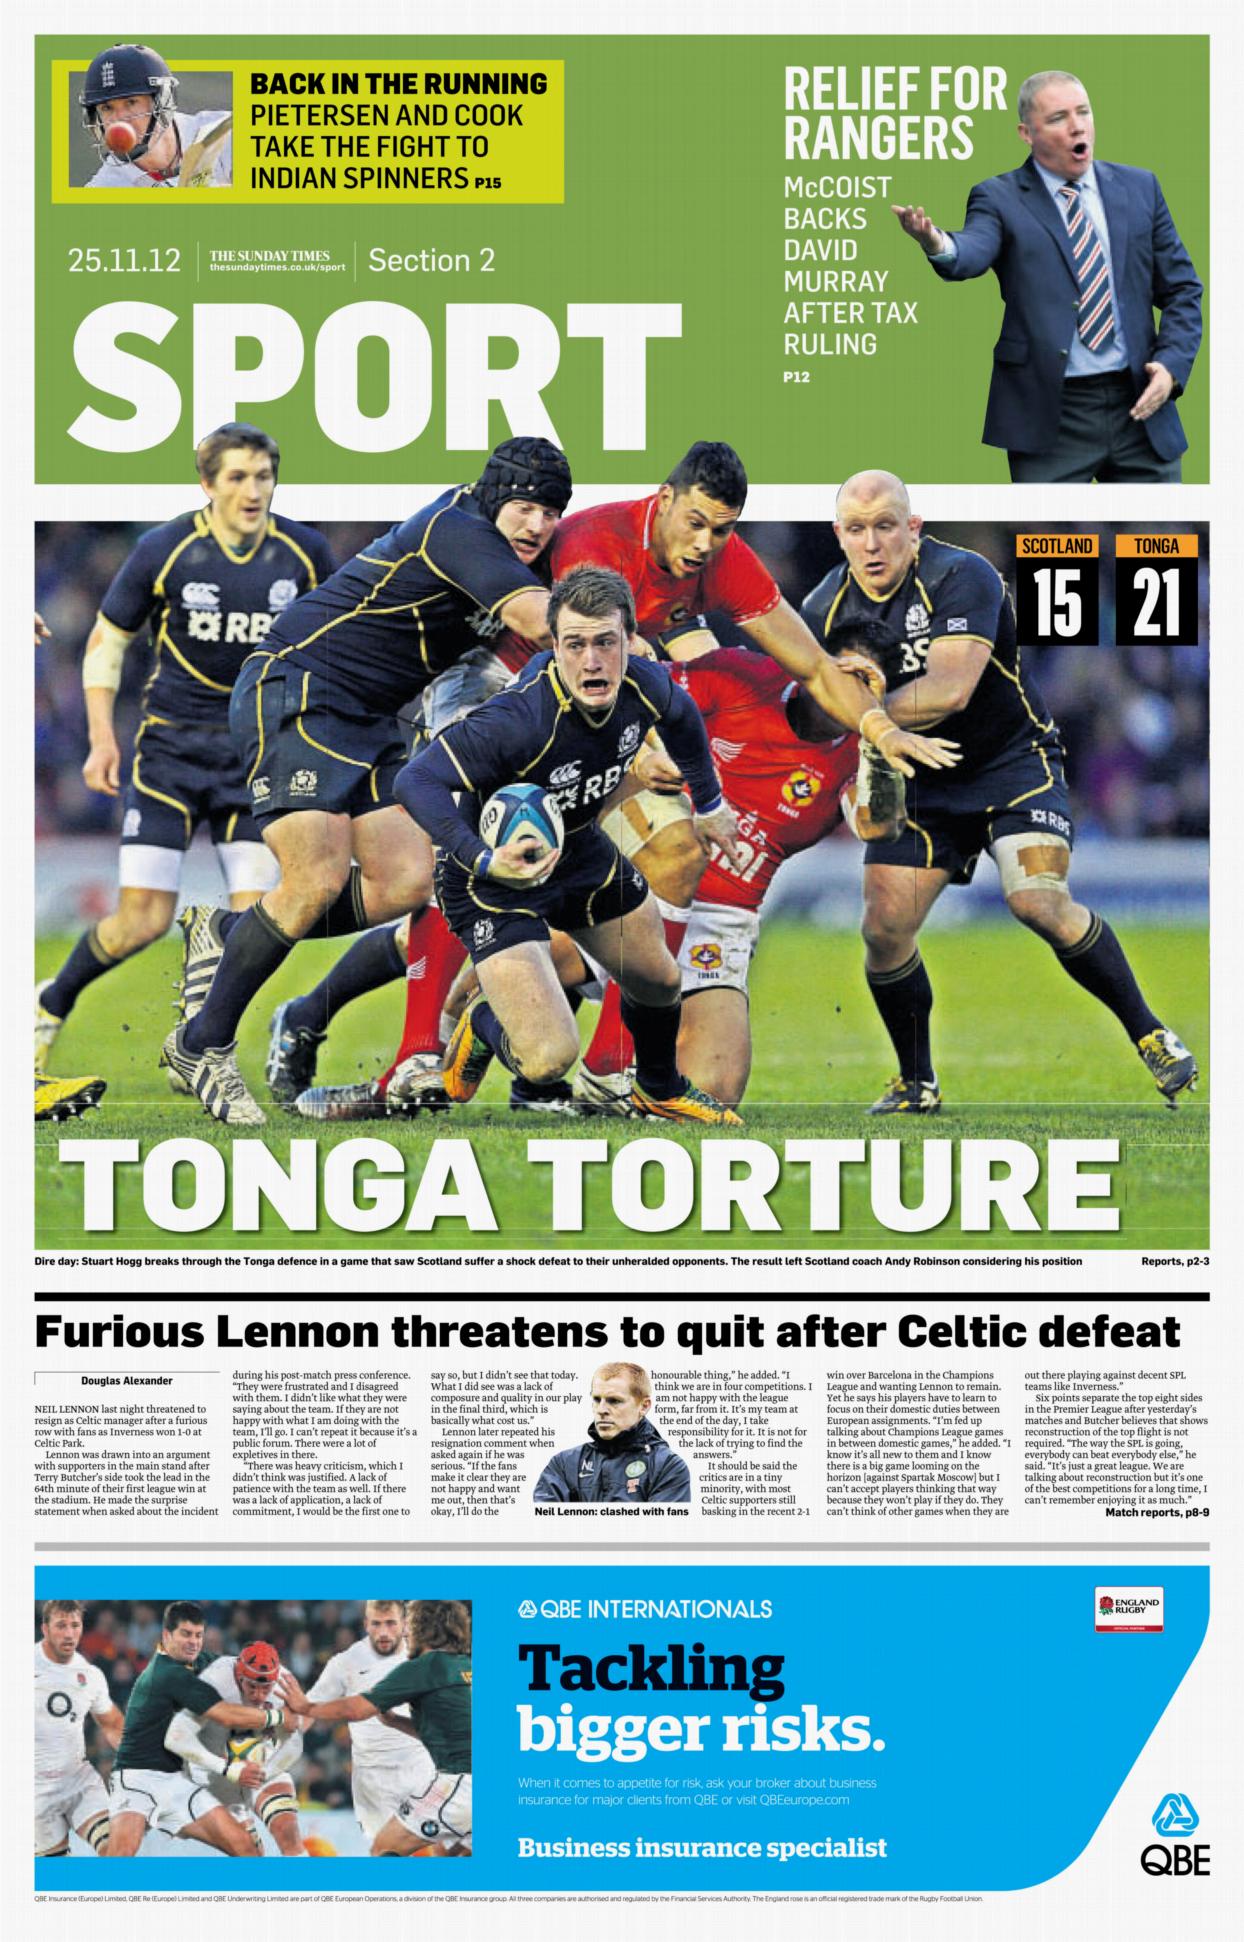 Sunday Times - Tonga